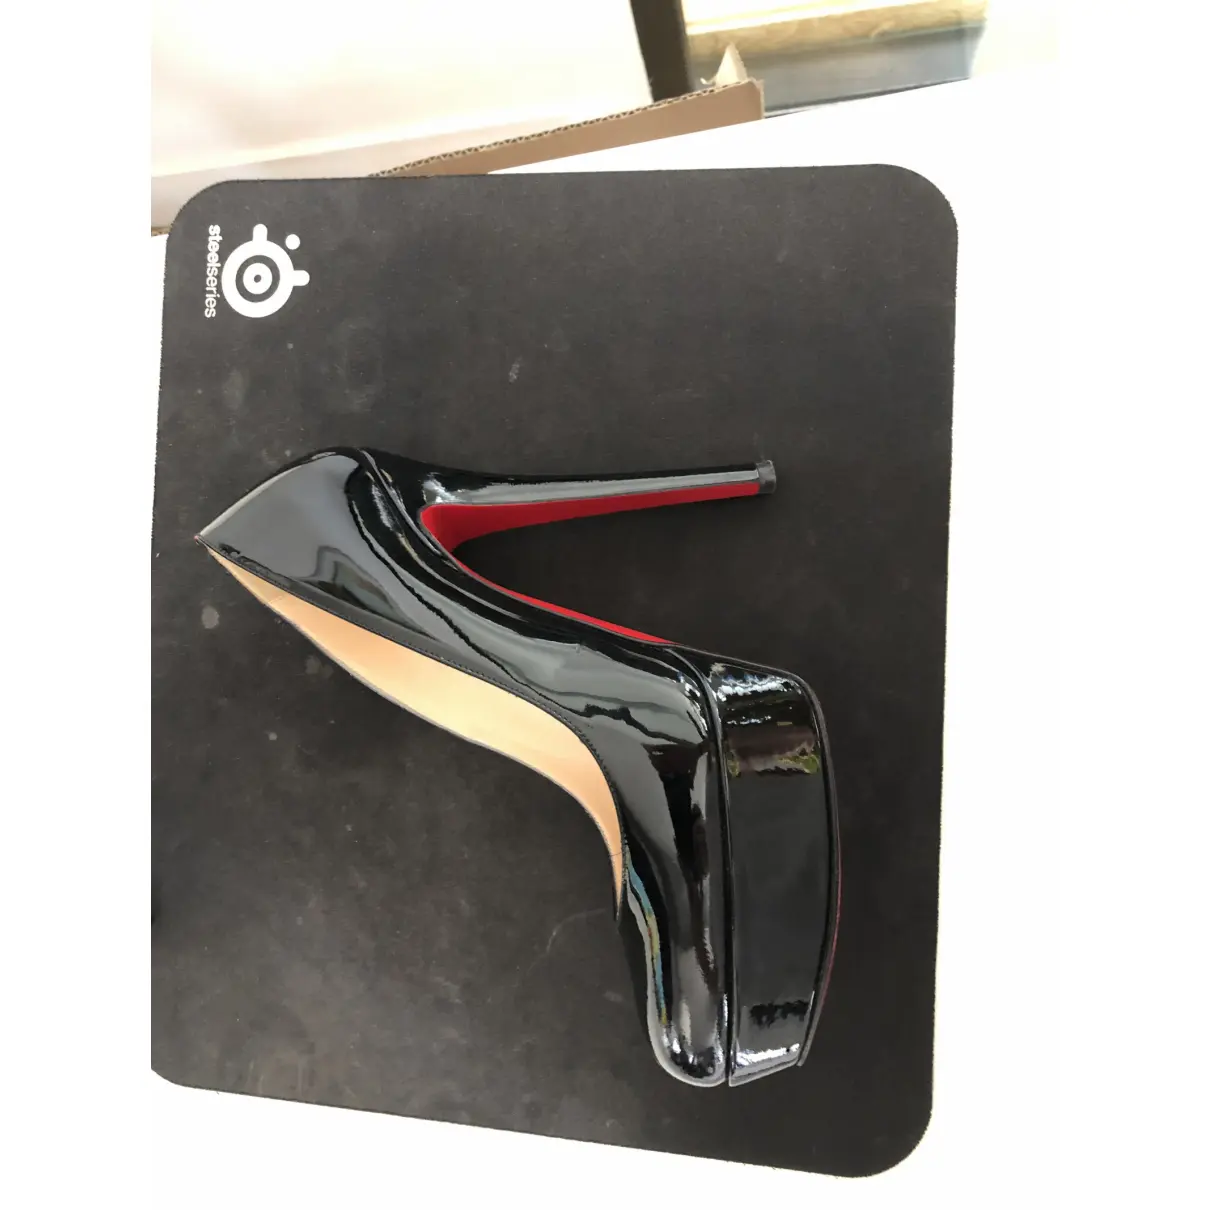 Bianca patent leather heels Christian Louboutin